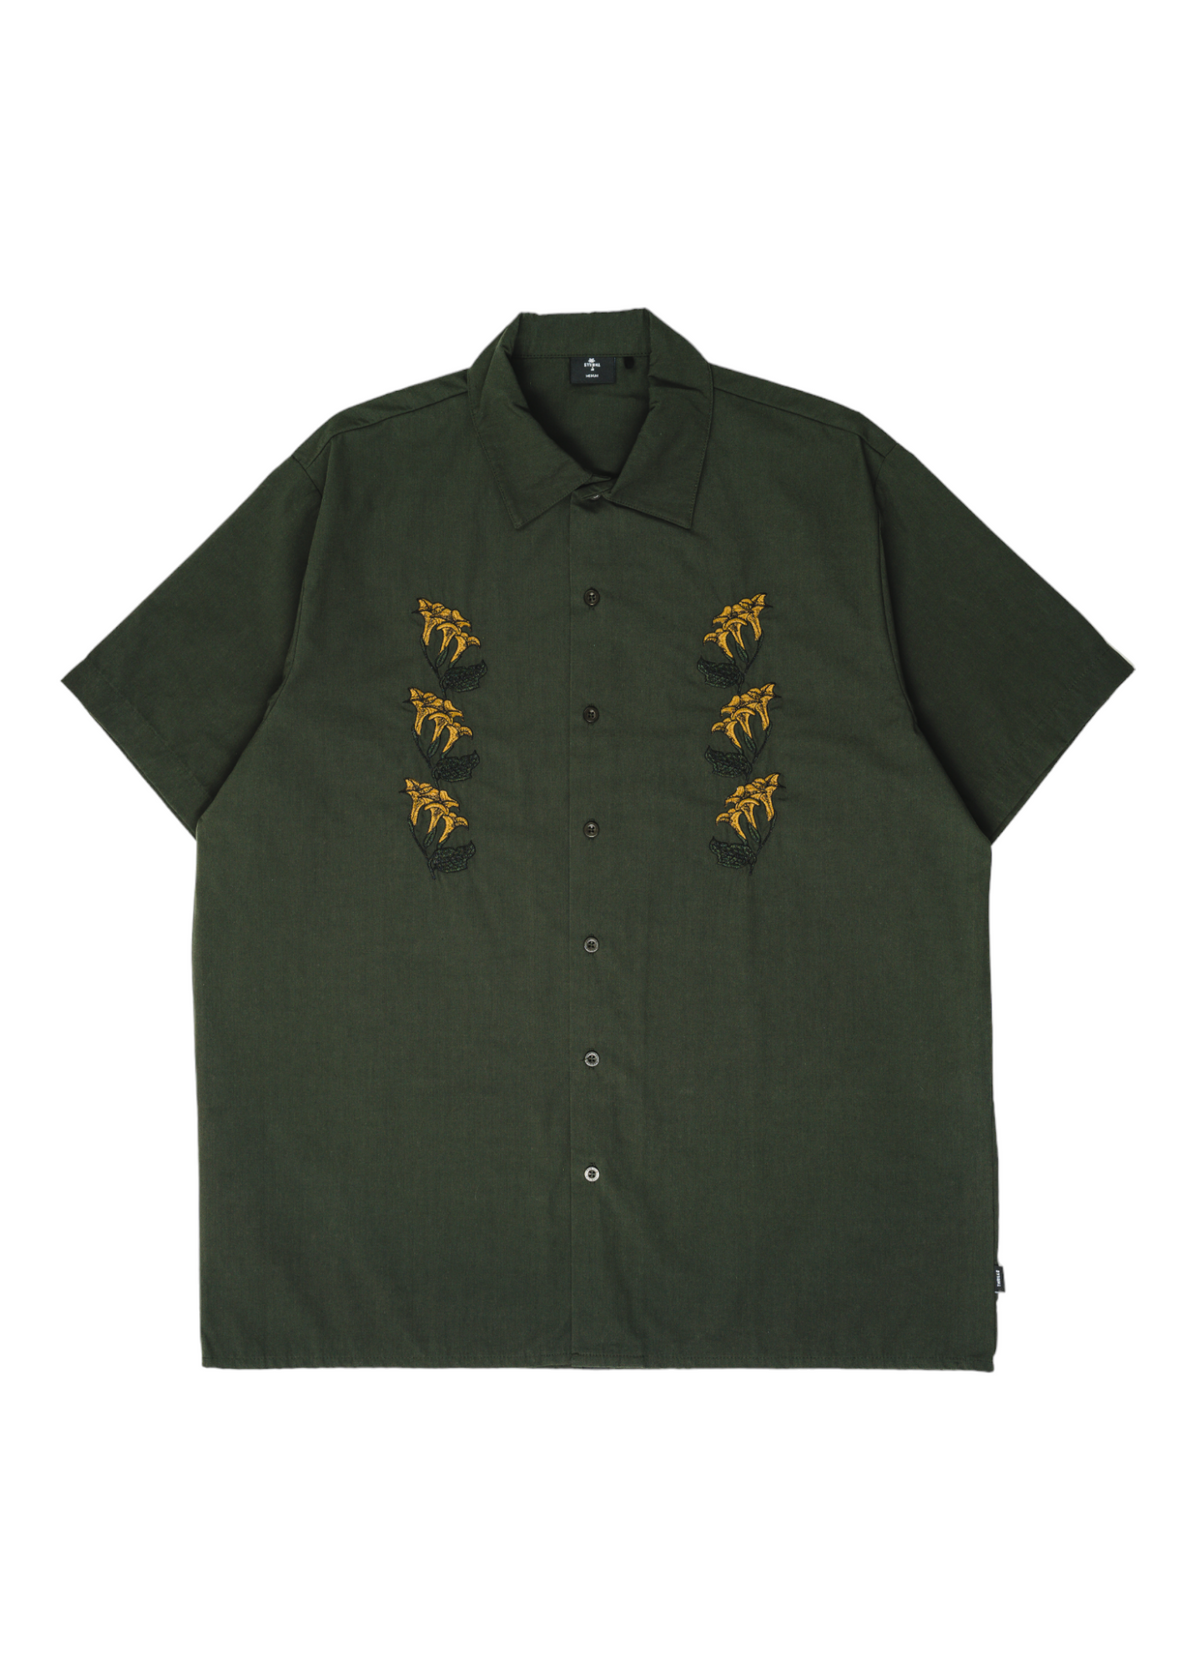 THRILLS - Secret Garden S/S Work Shirt - Oil Green